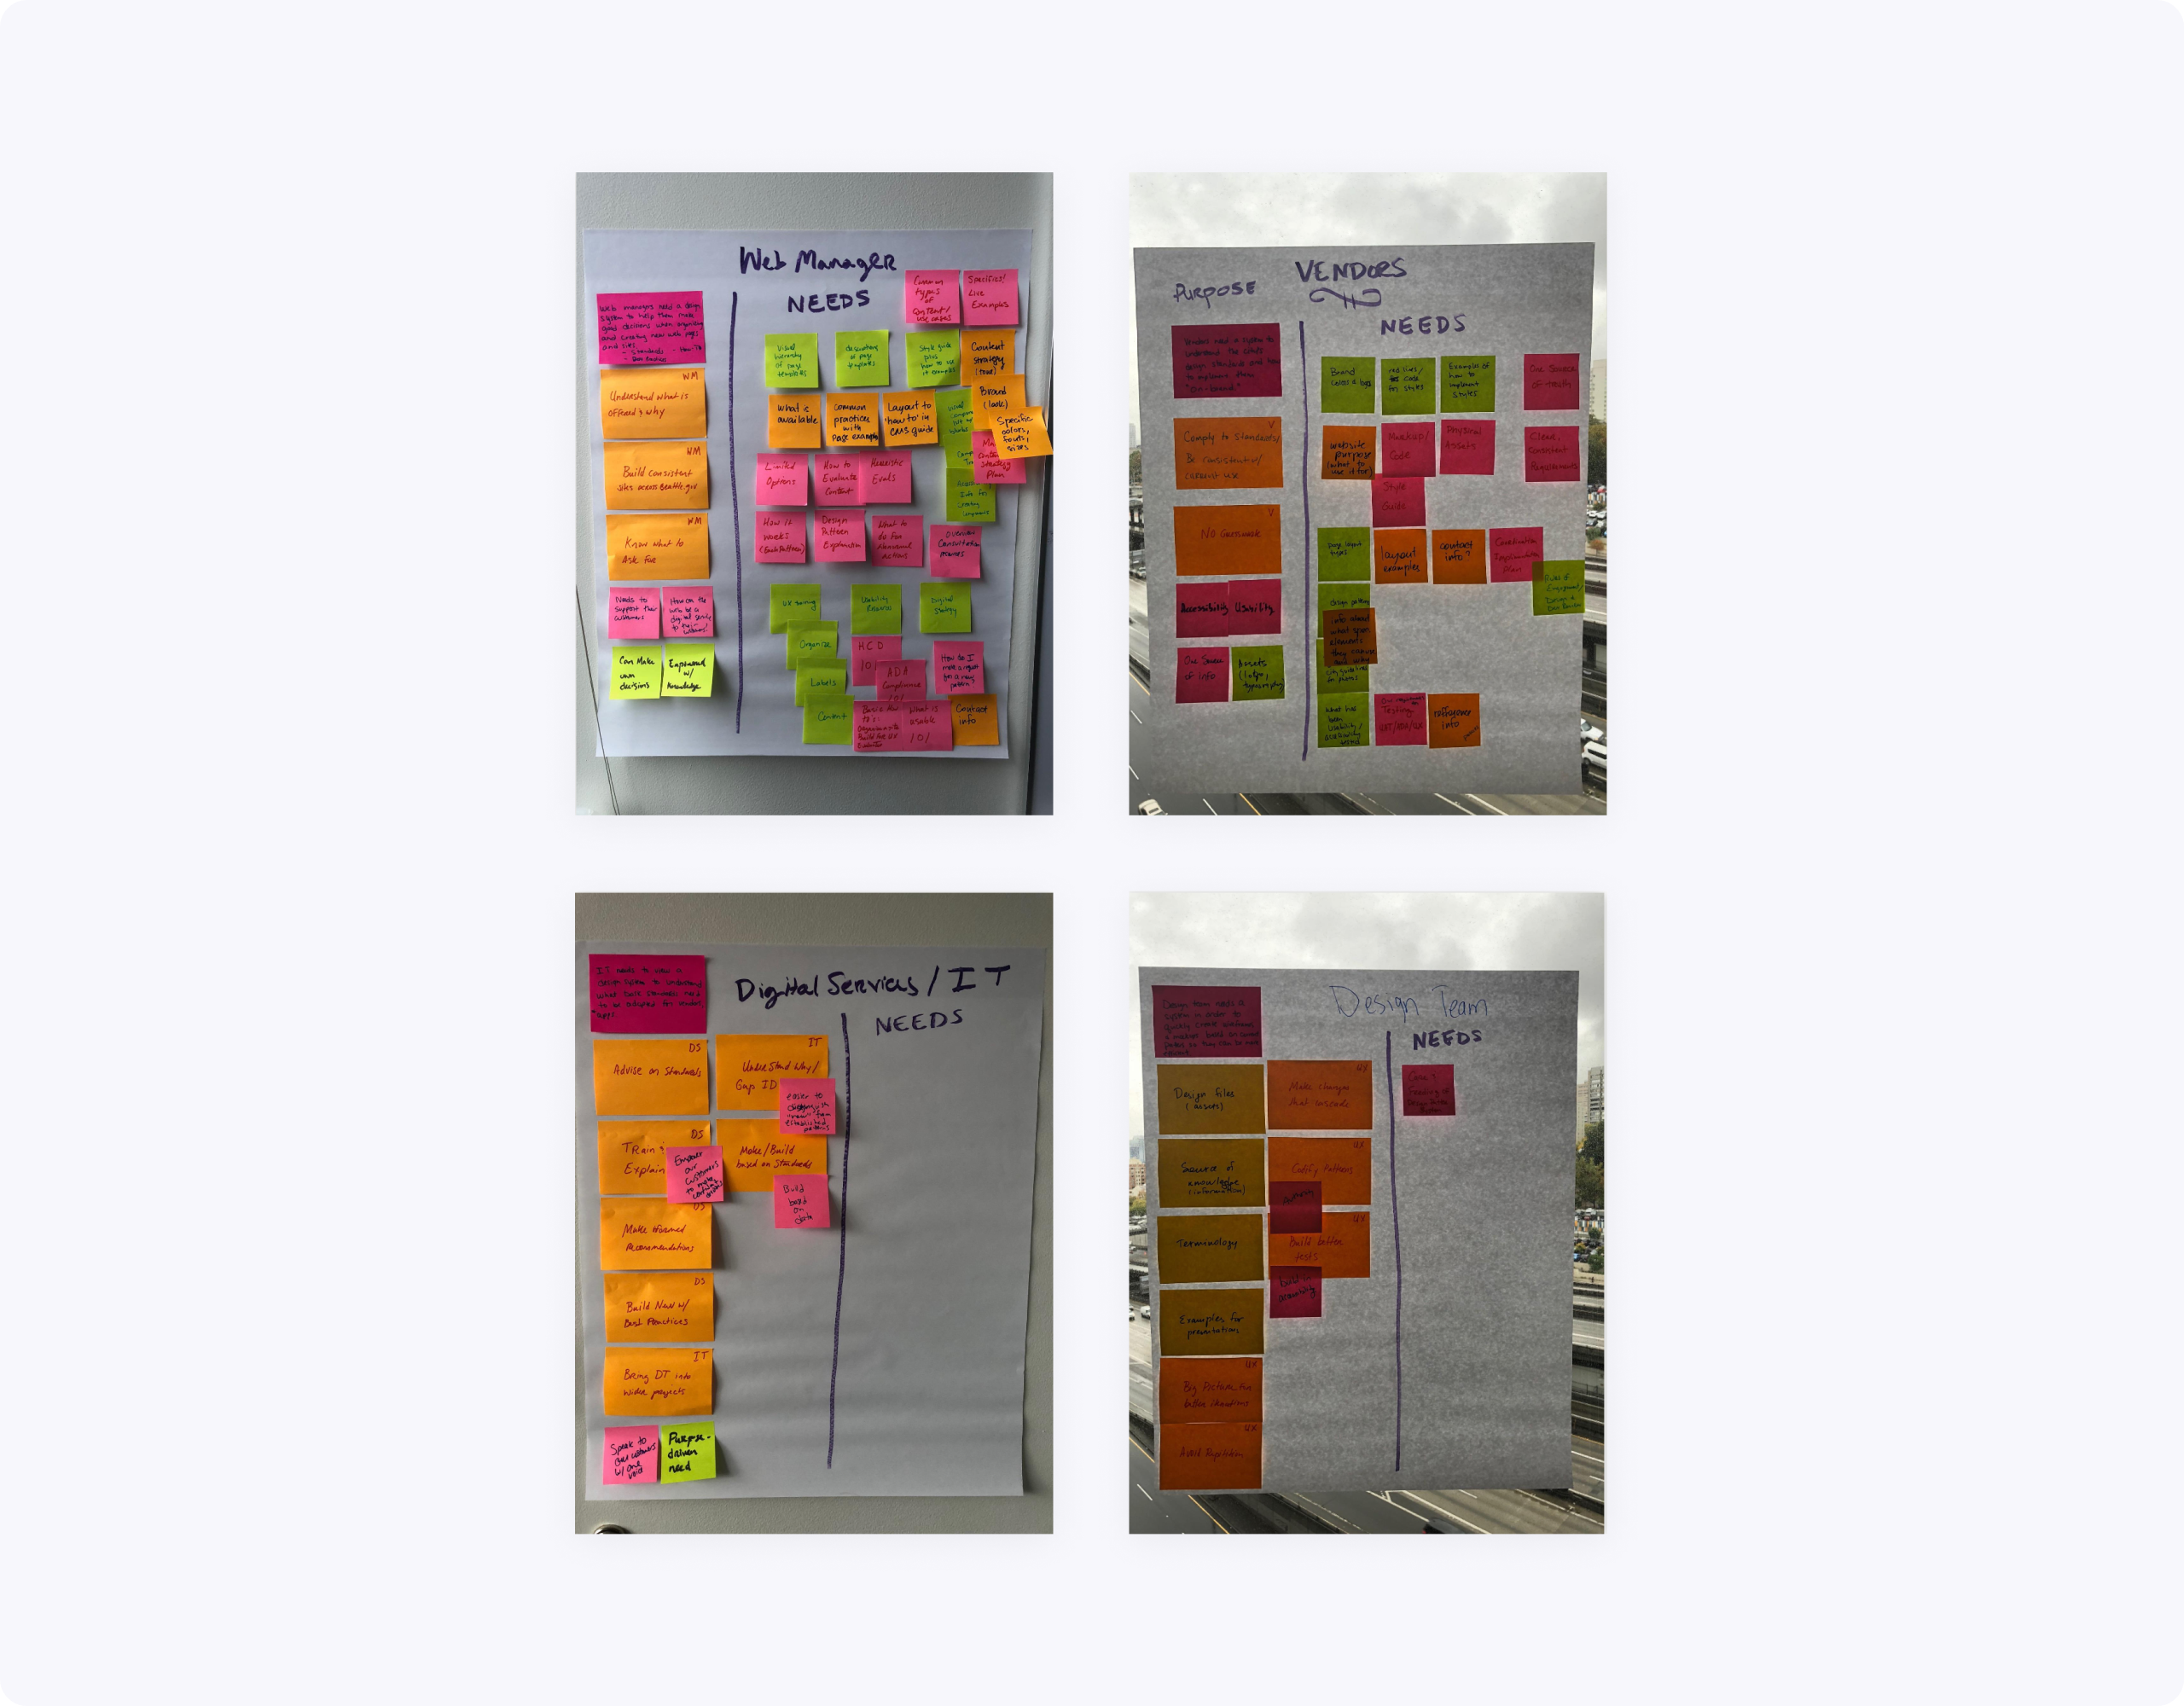 brainstorming notes of user categories